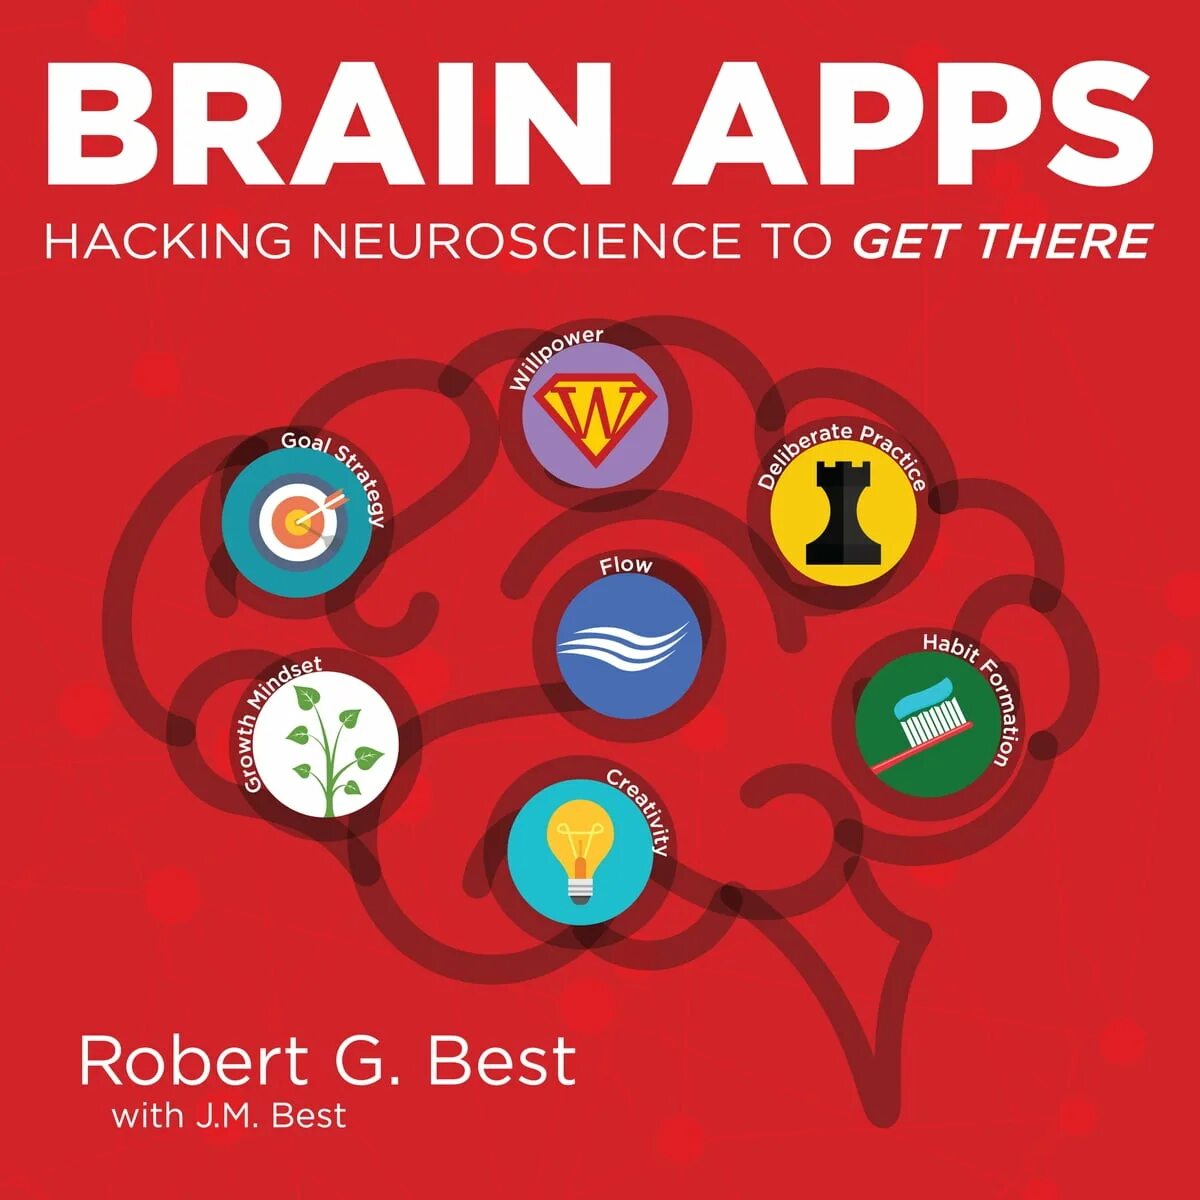 Brain apps. Brain Hacking. Книга мозг. BRAINAPP картинка.